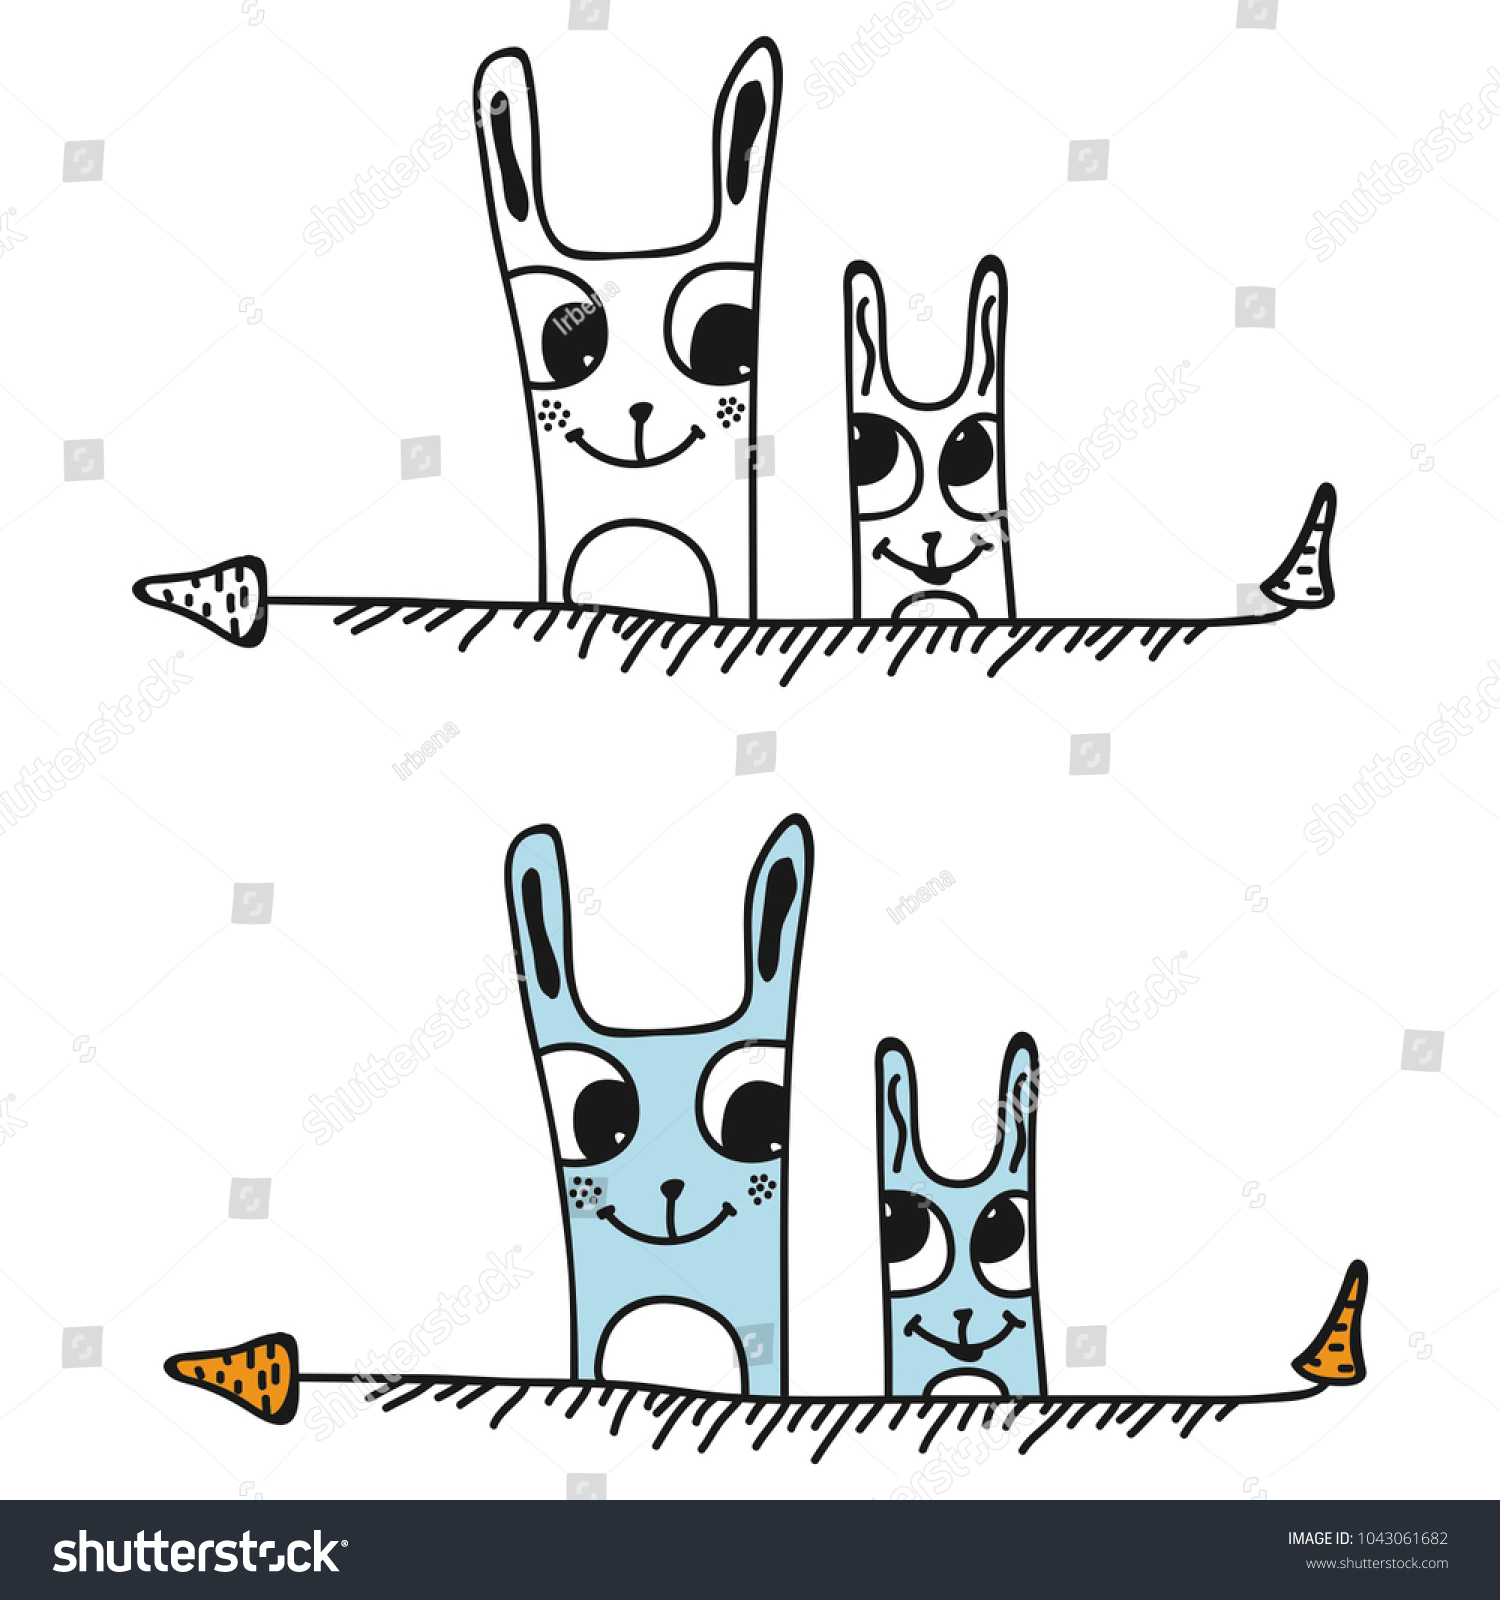 Cute Bunnies Vector Illustration Stock Vector Royalty Free Shutterstock